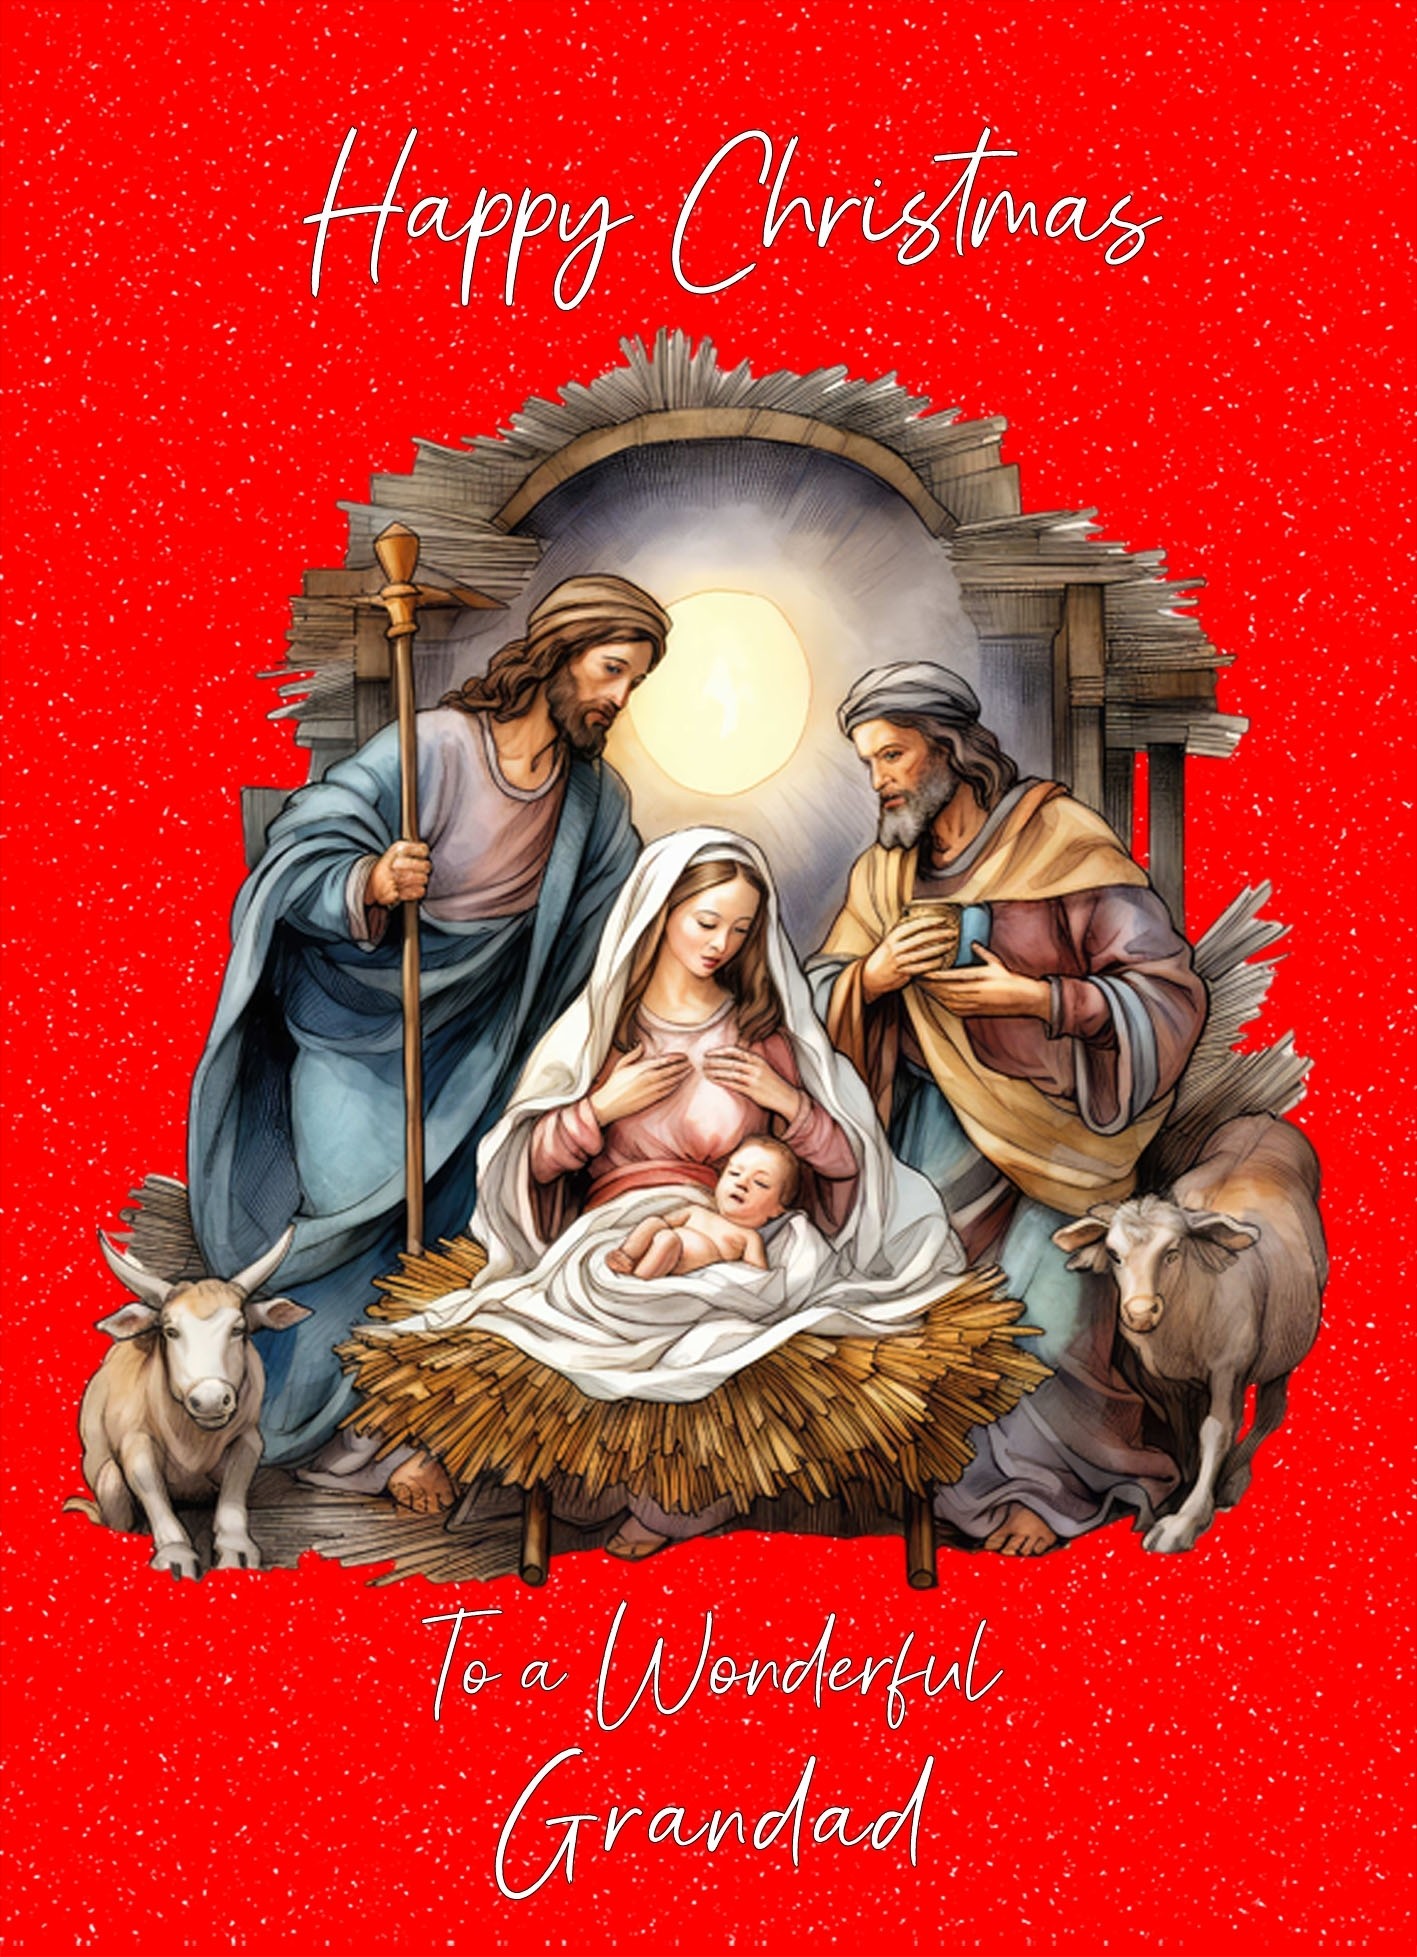 Christmas Card For Grandad (Nativity Scene)